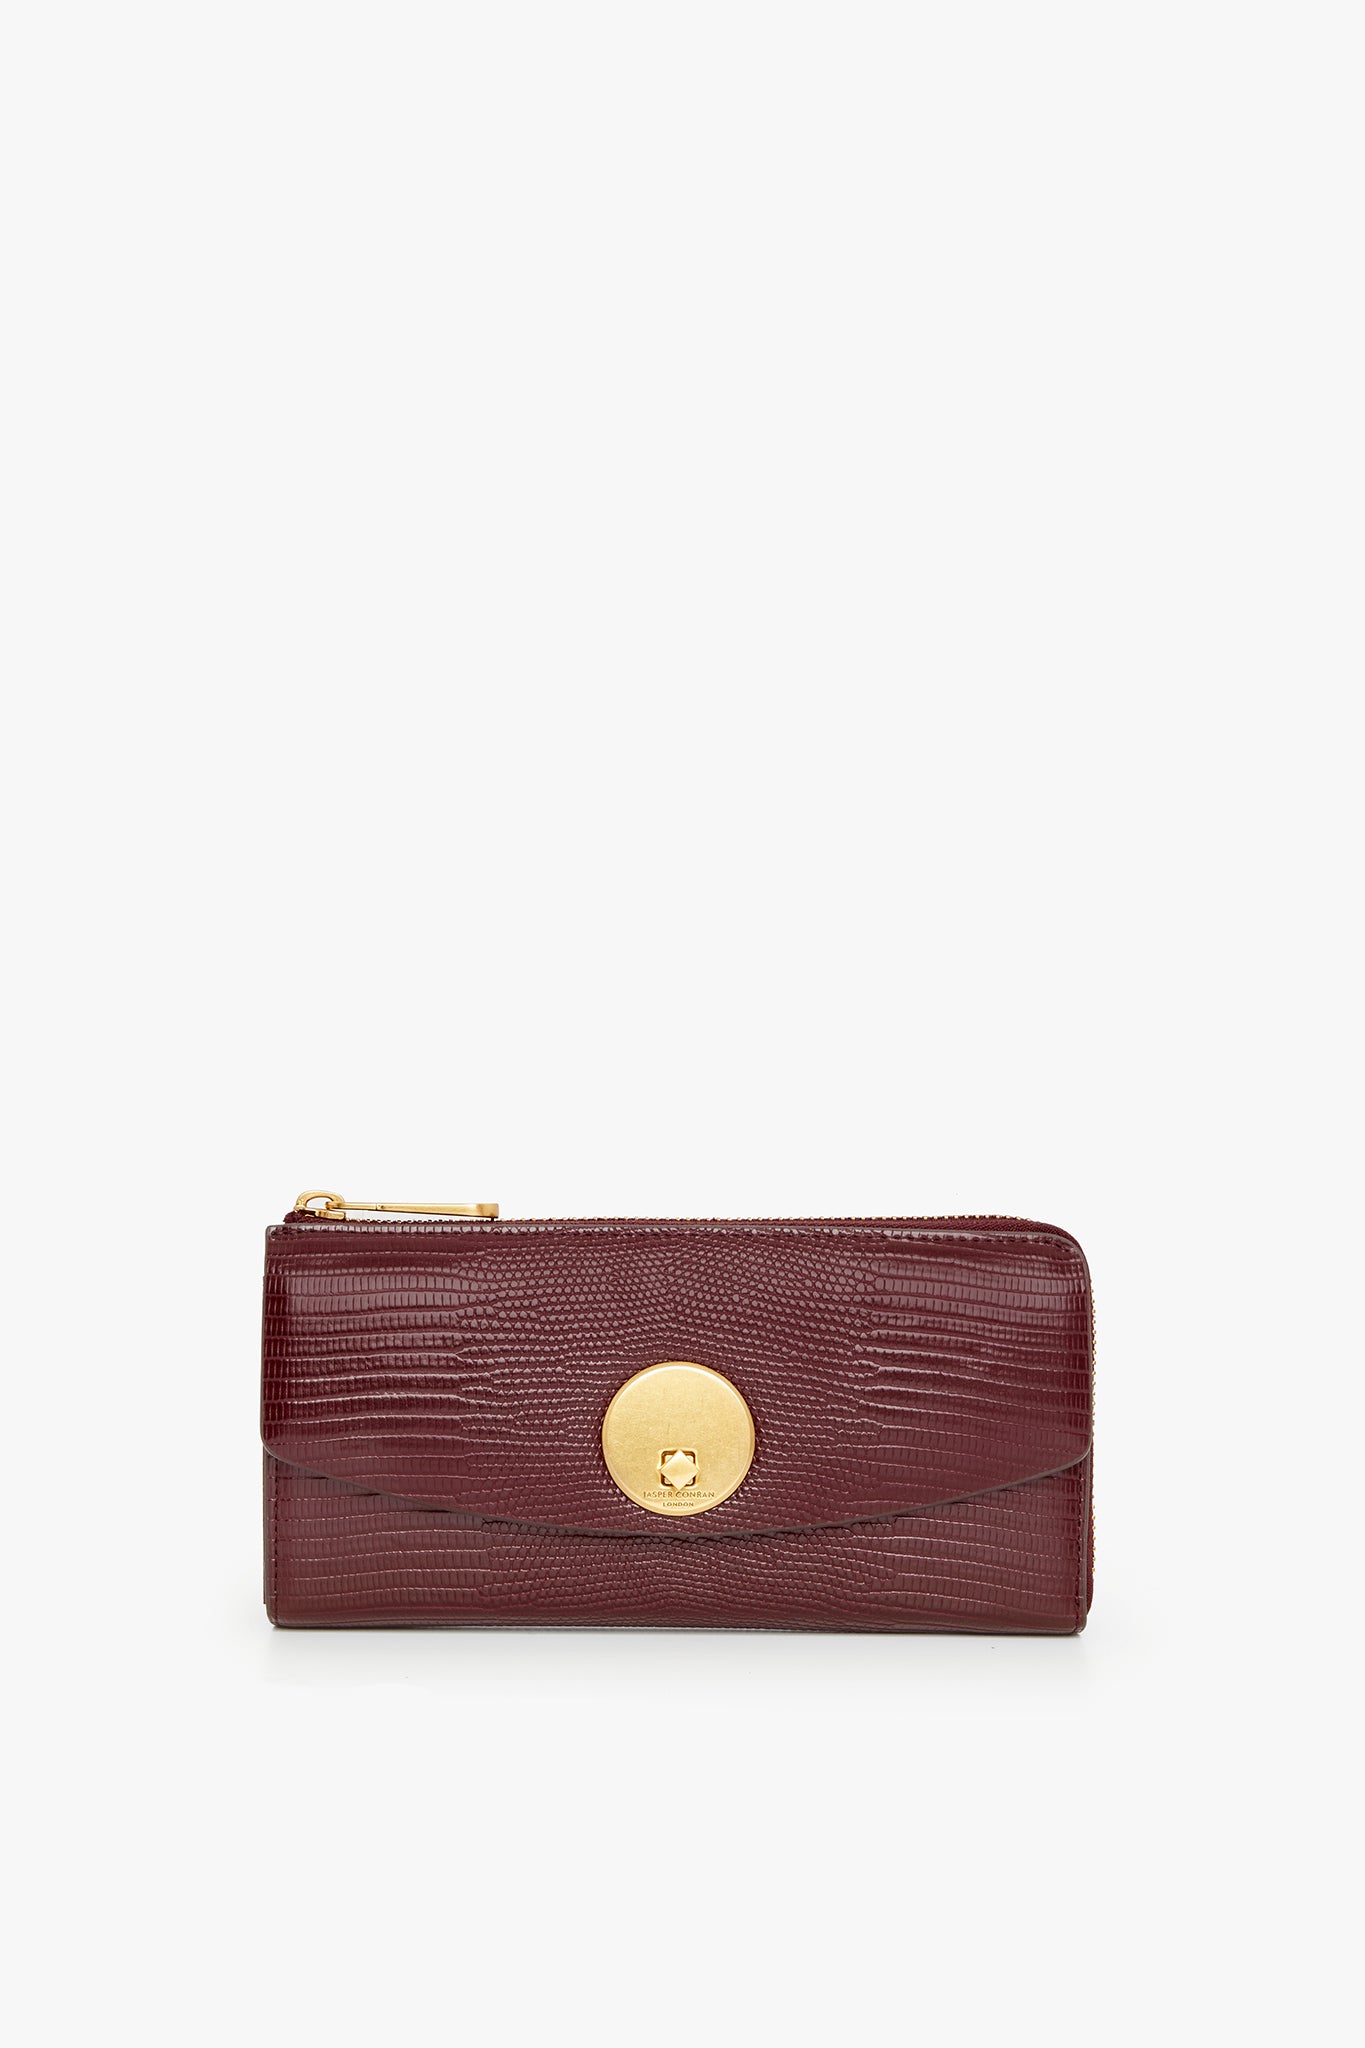 Jasper conran | Handbags, Purses & Women's Bags for Sale | Gumtree